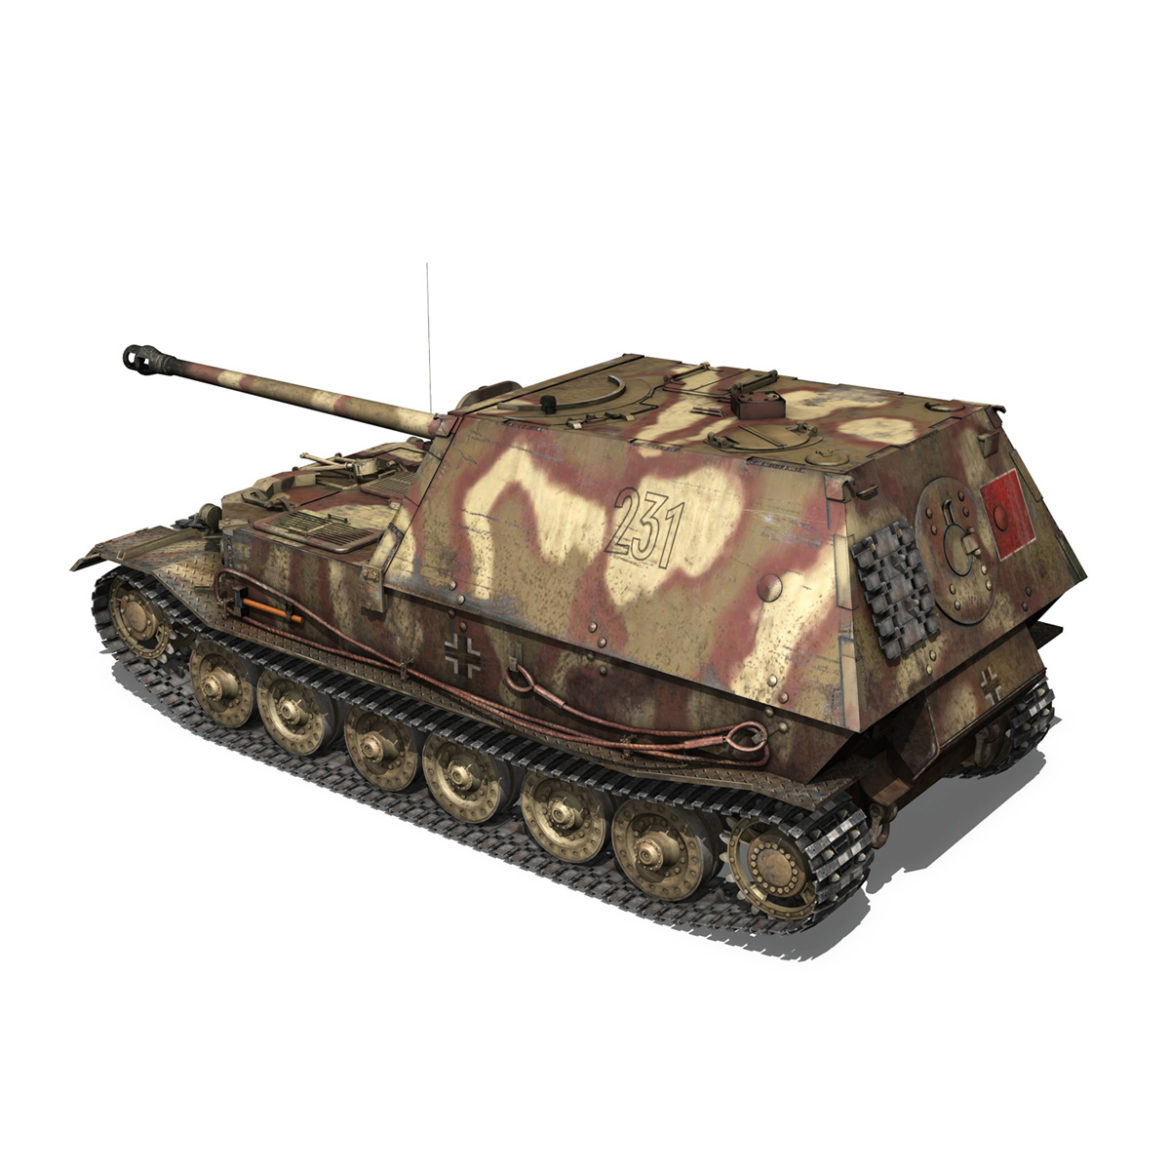 ferdinand tank destroyer – tiger (p) – 231 3d model 3ds fbx c4d lwo obj 295020